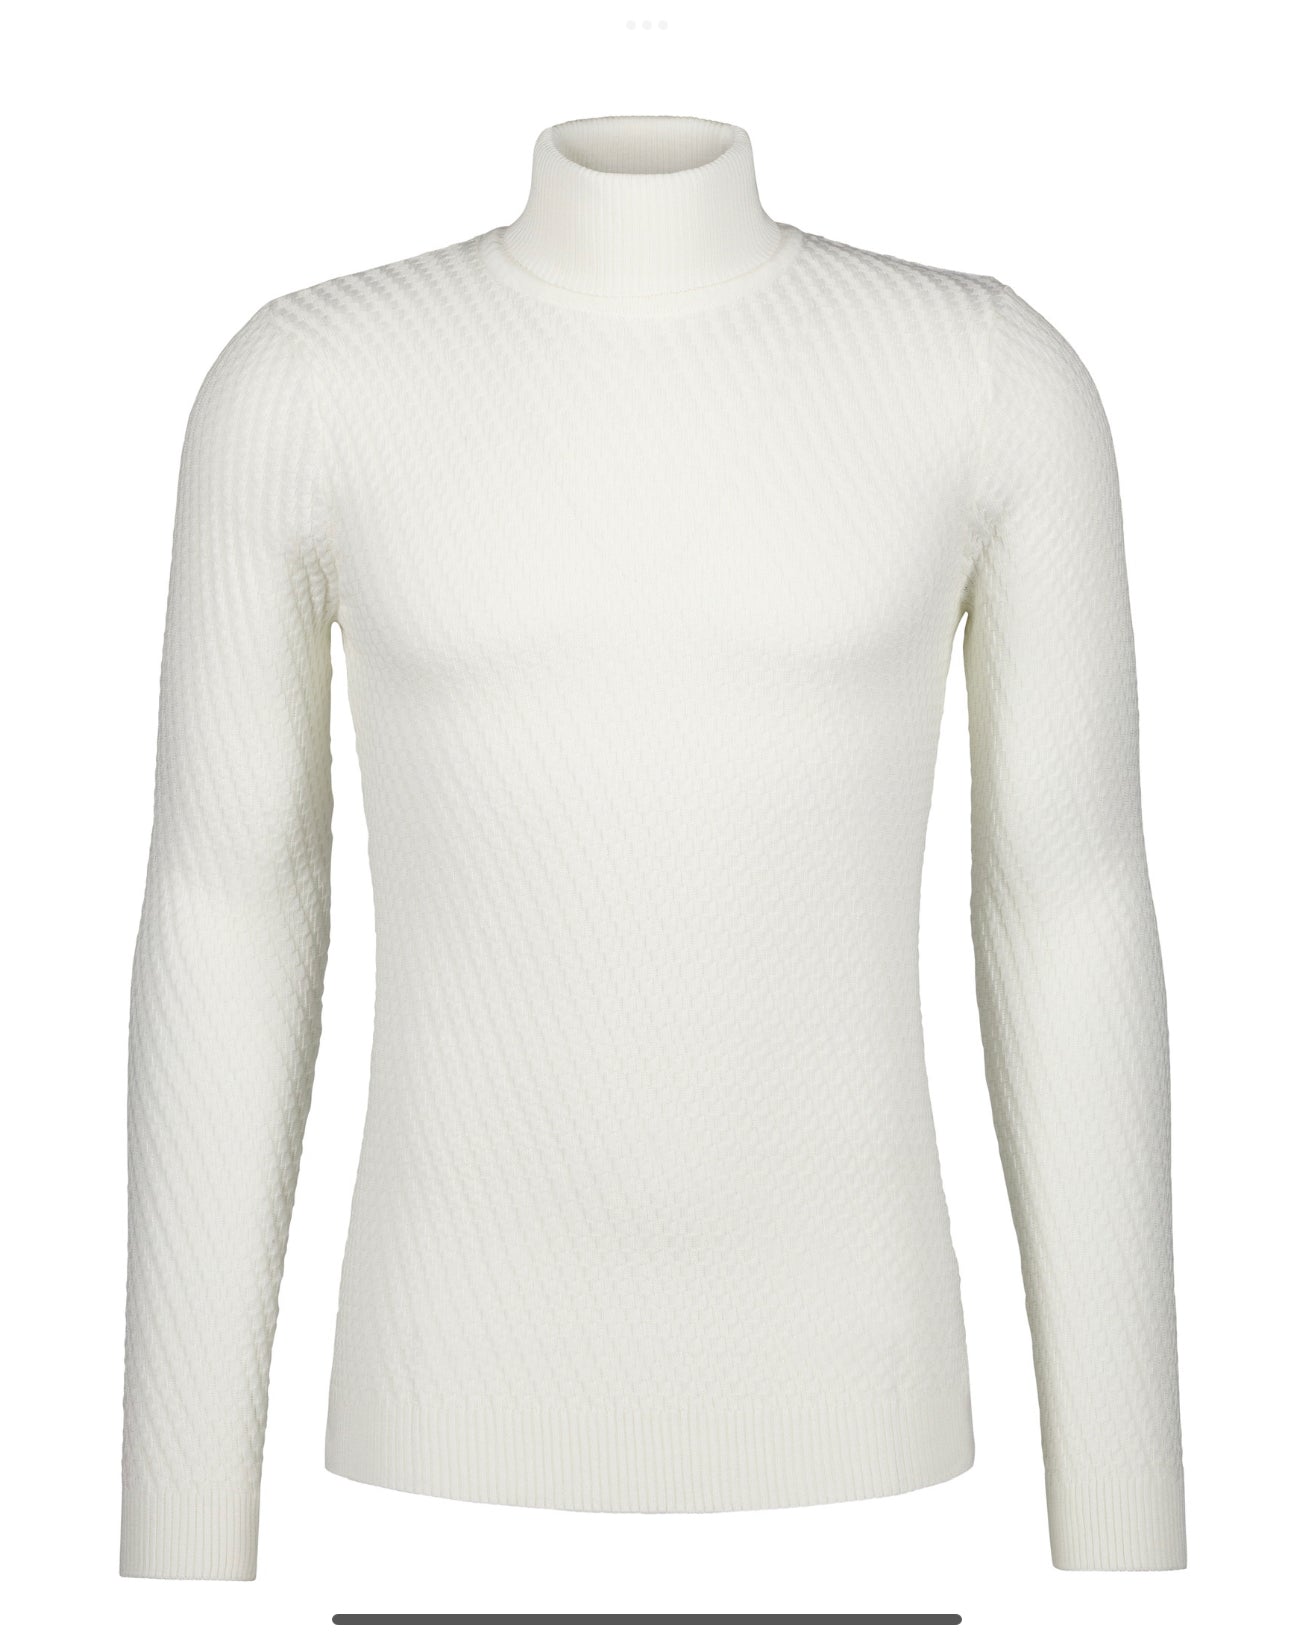 Textured Knit Turtleneck Sweater -  White - Sweater by Urbbana